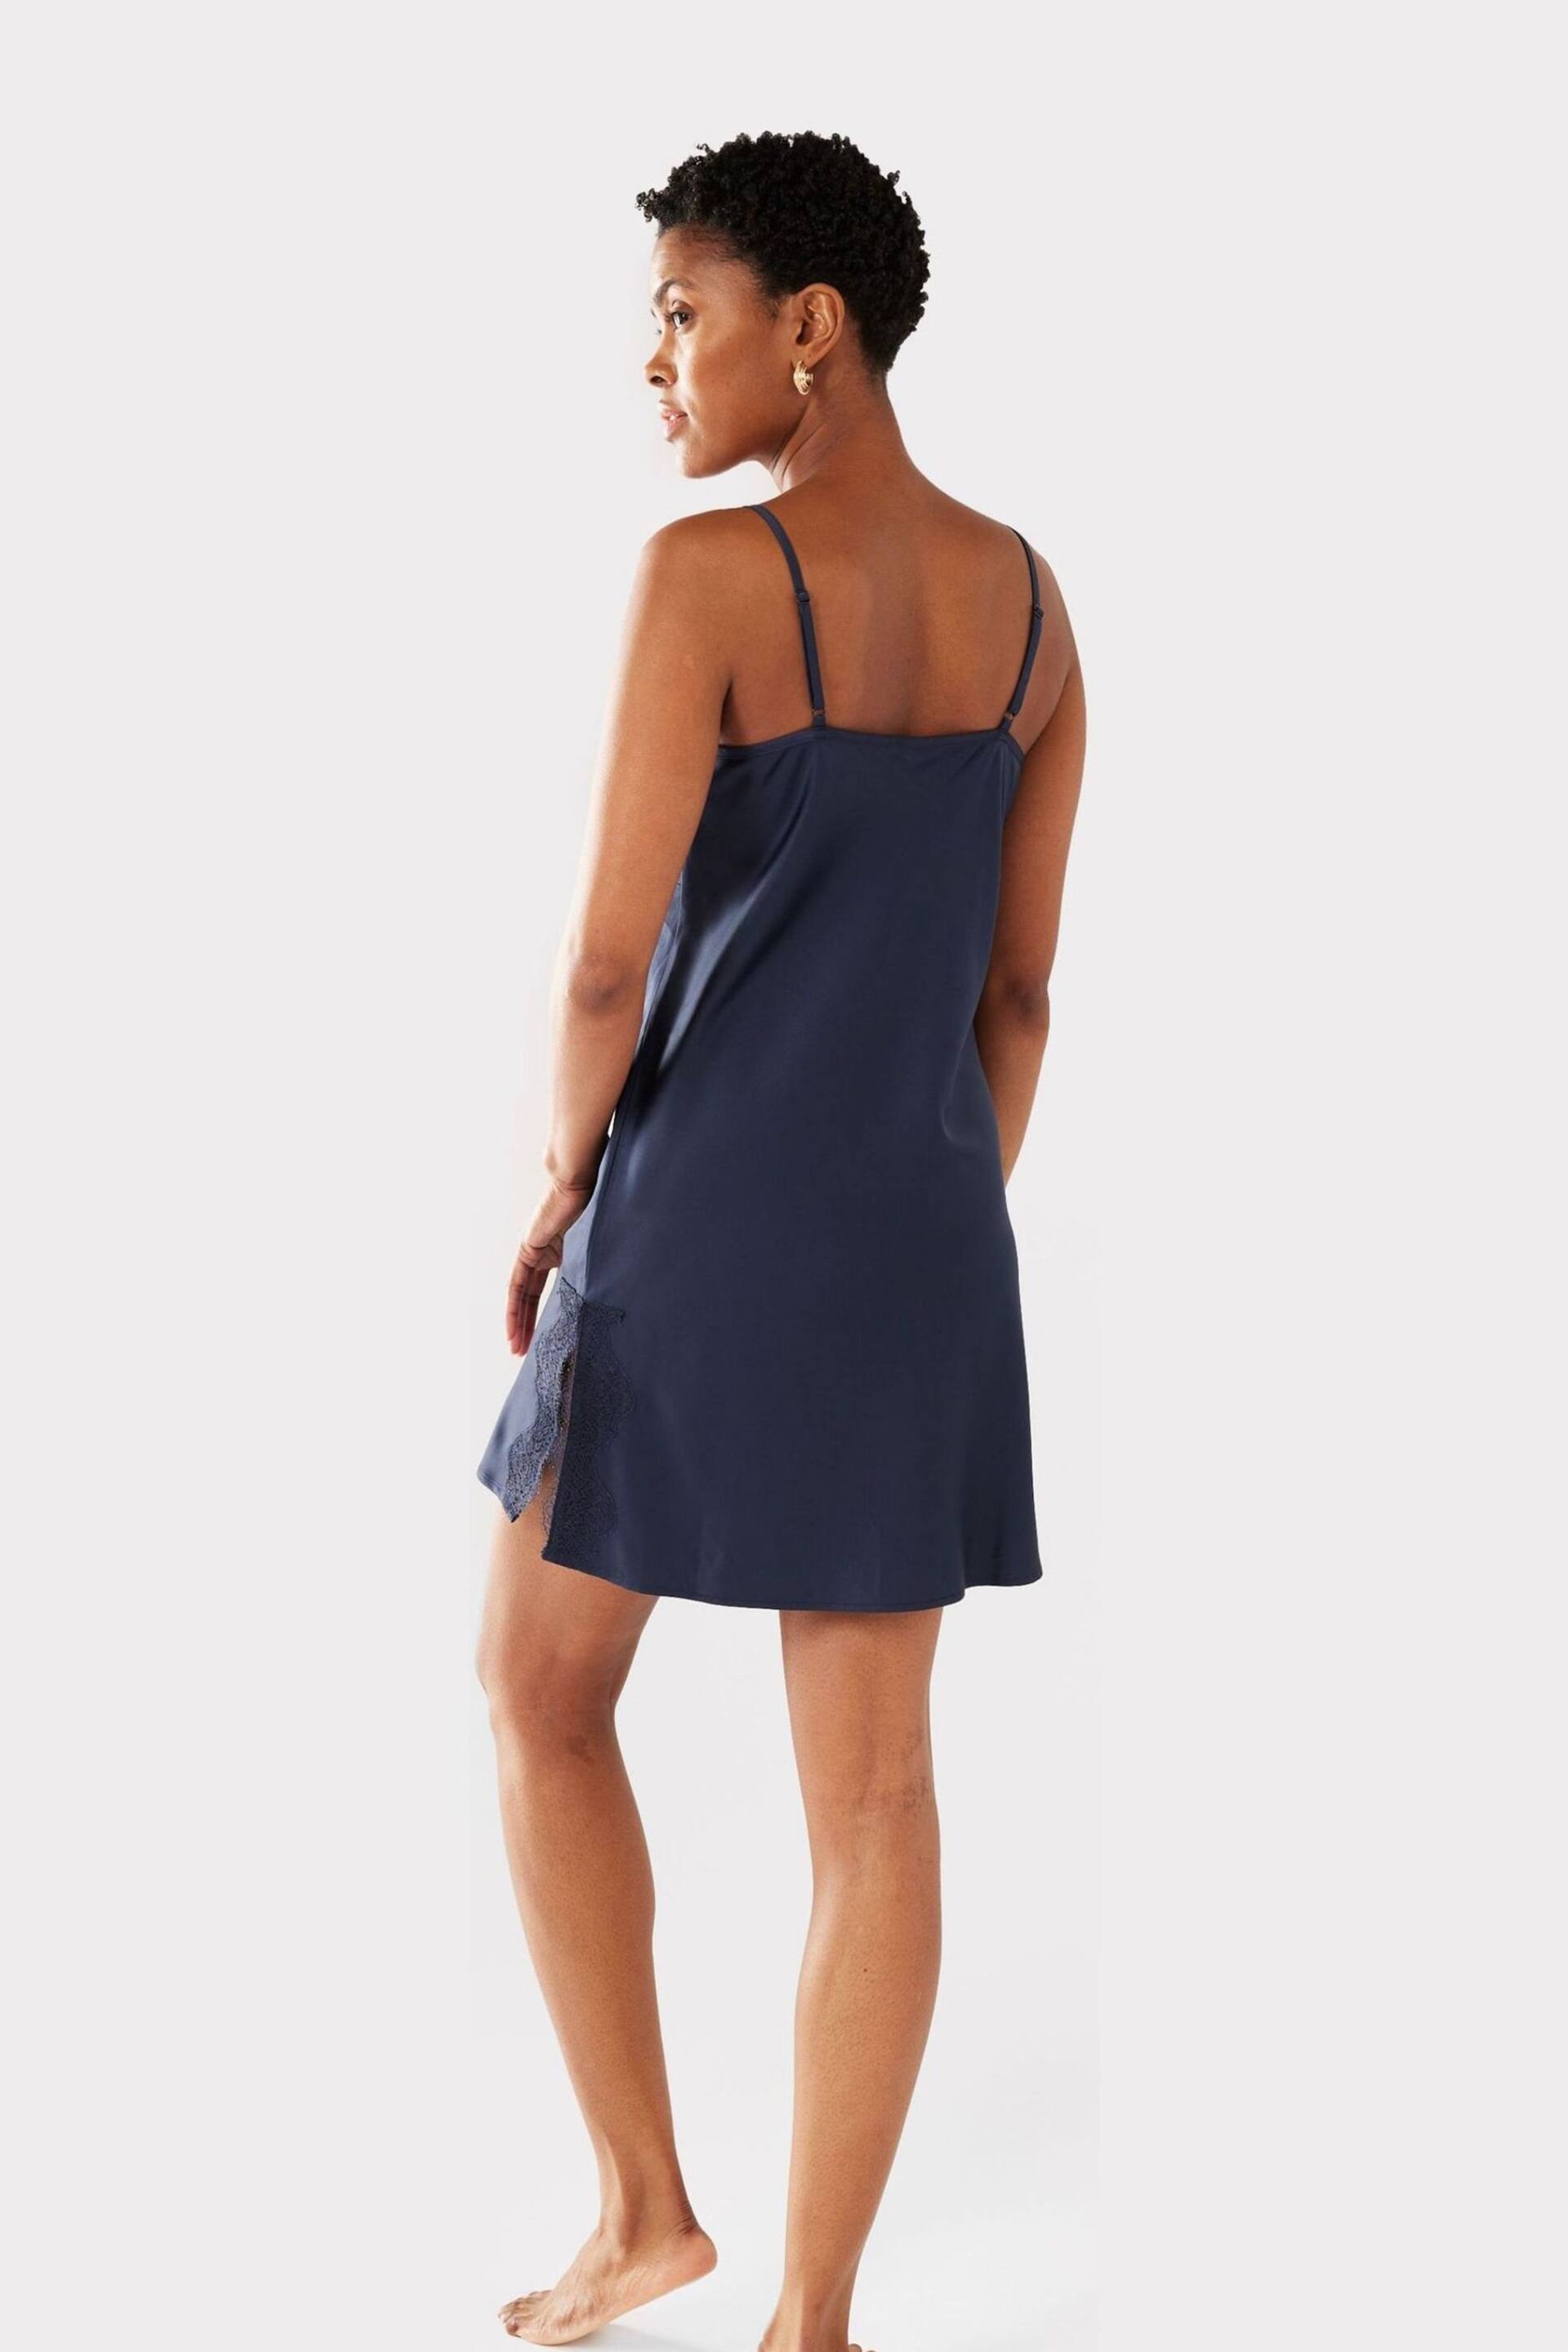 Chelsea Peers Navy Blue Satin Lace Trim Slip Nightdress - Image 3 of 5